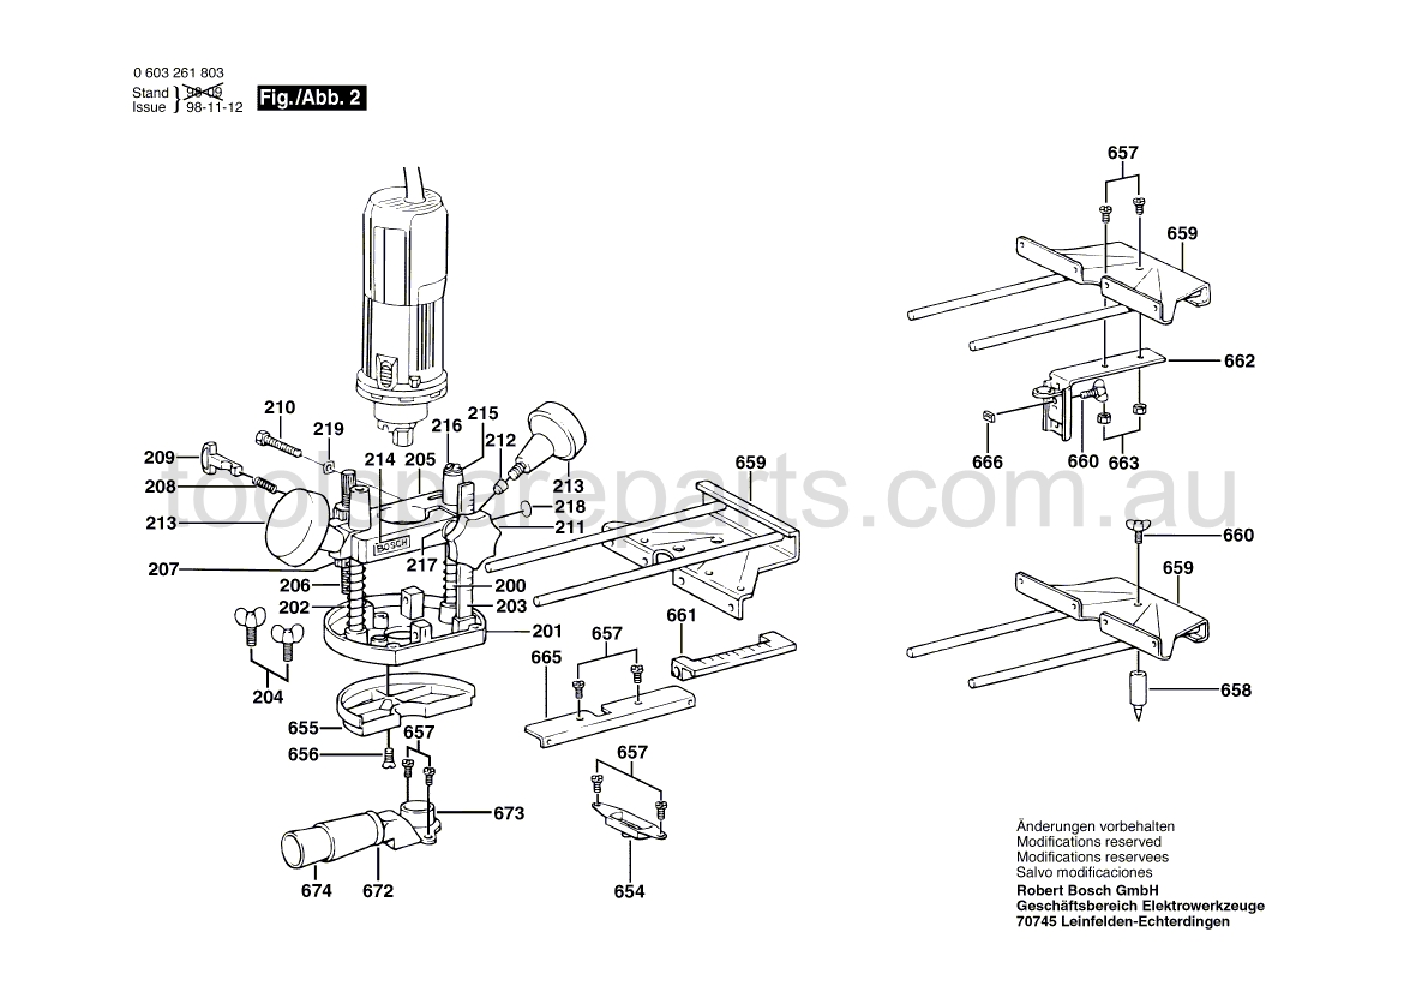 Bosch POF 500 A 0603261837  Diagram 2